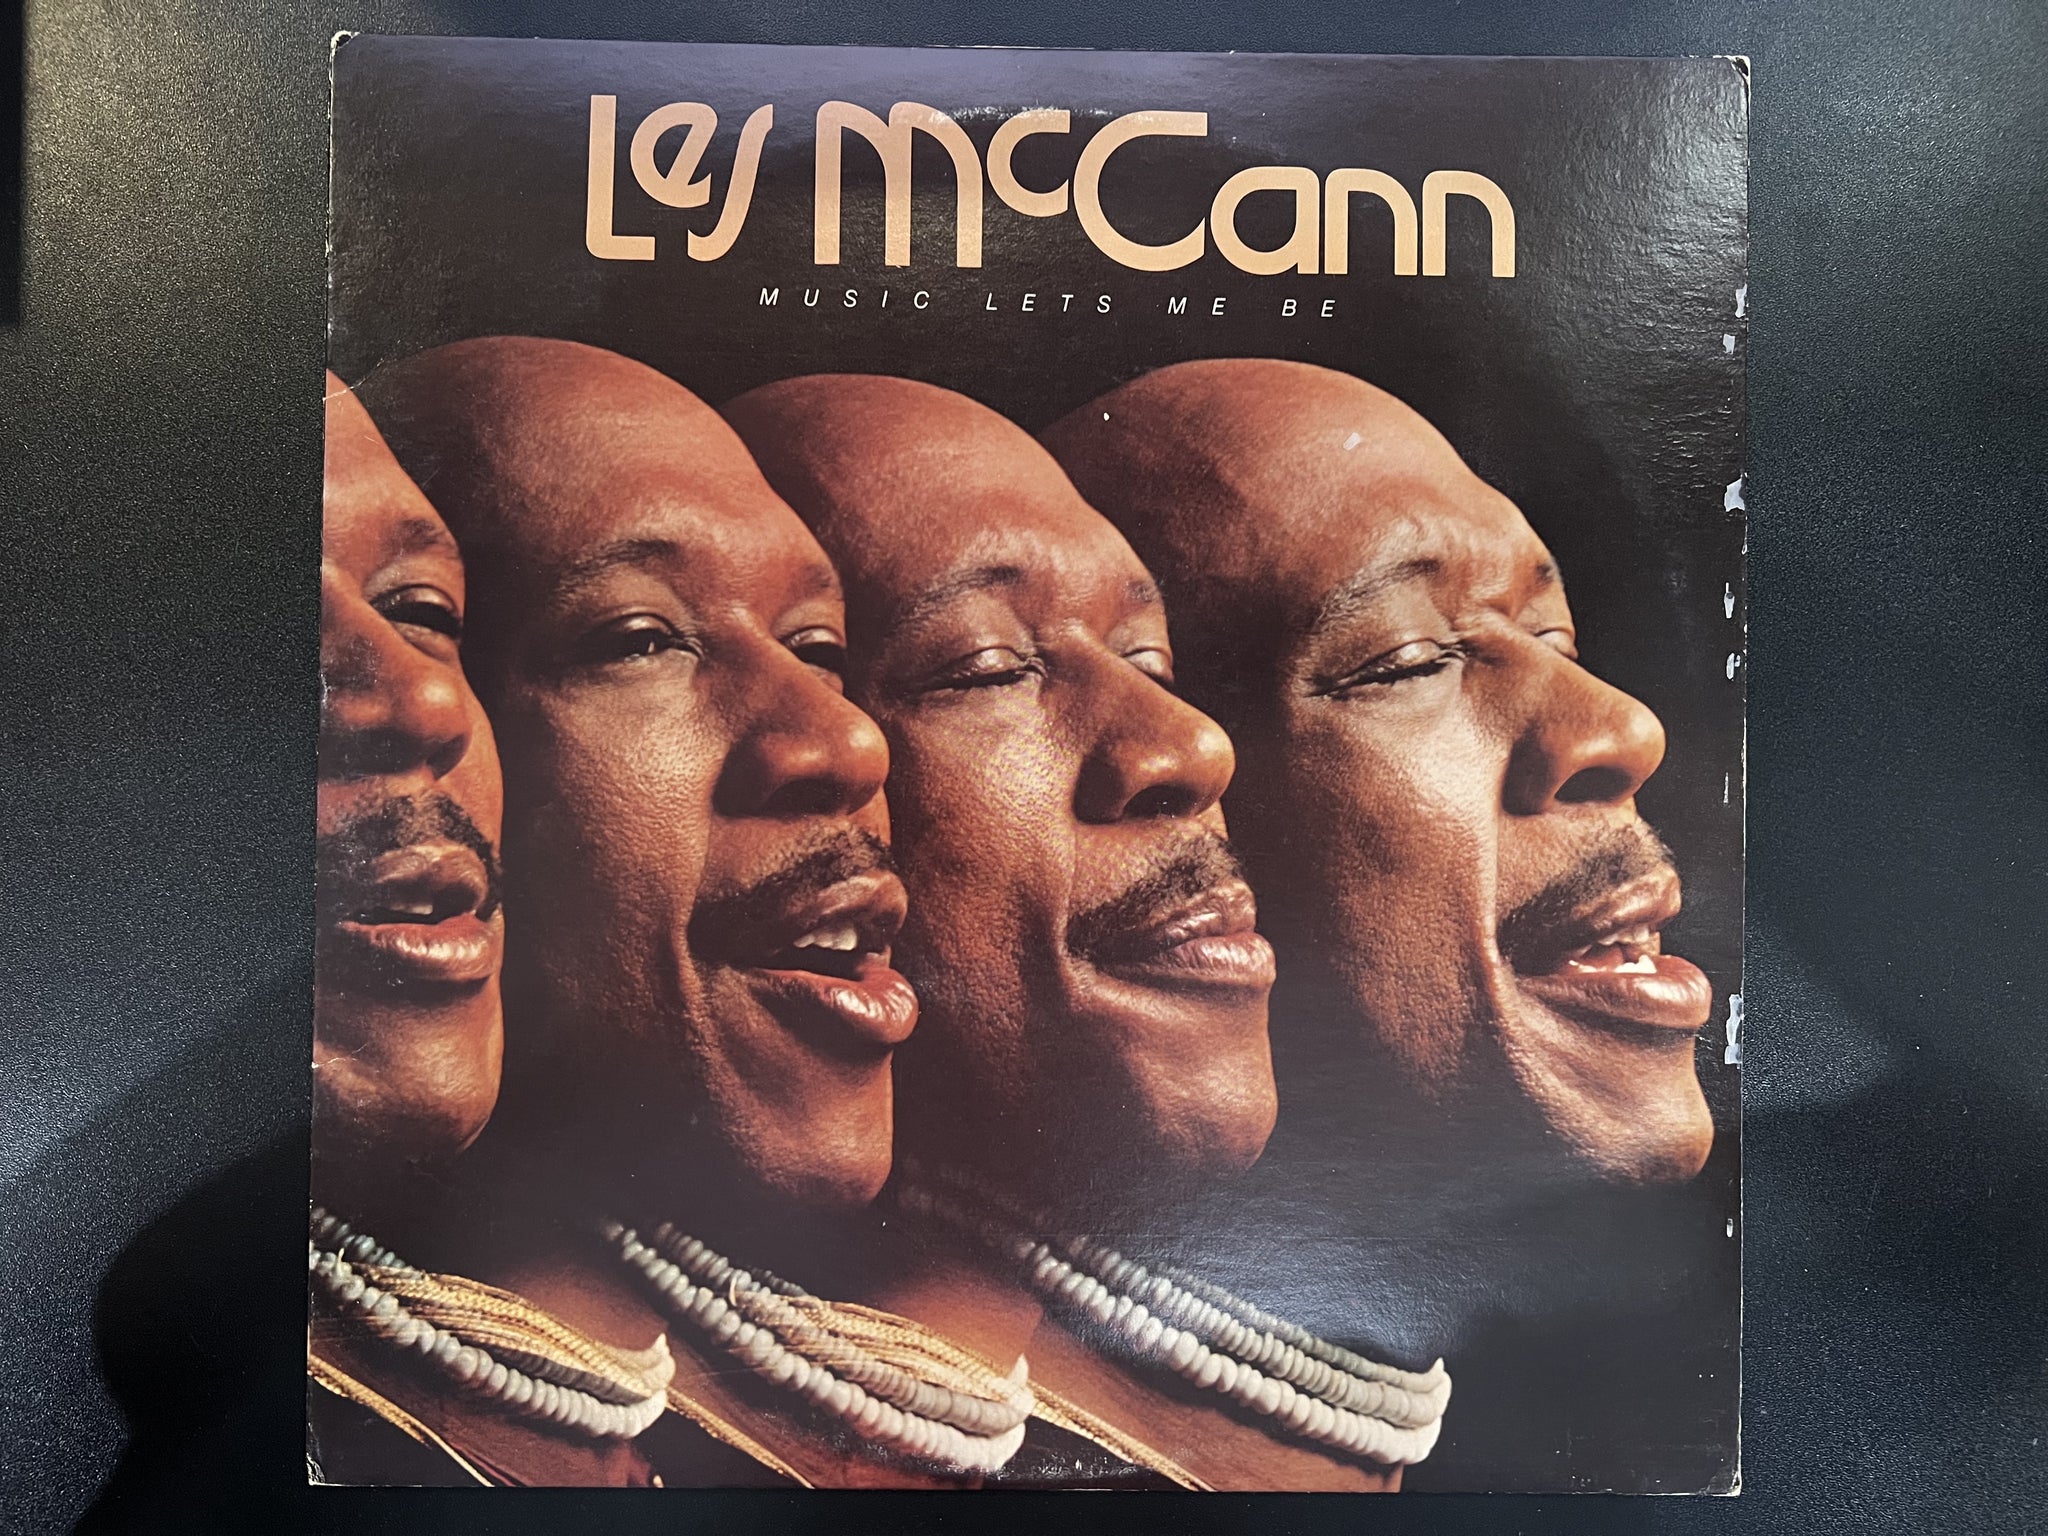 Les McCann – Music Lets Me Be - Mint- LP Record 1977 ABC USA Vinyl - Jazz / Soul-Jazz / Jazz-Funk